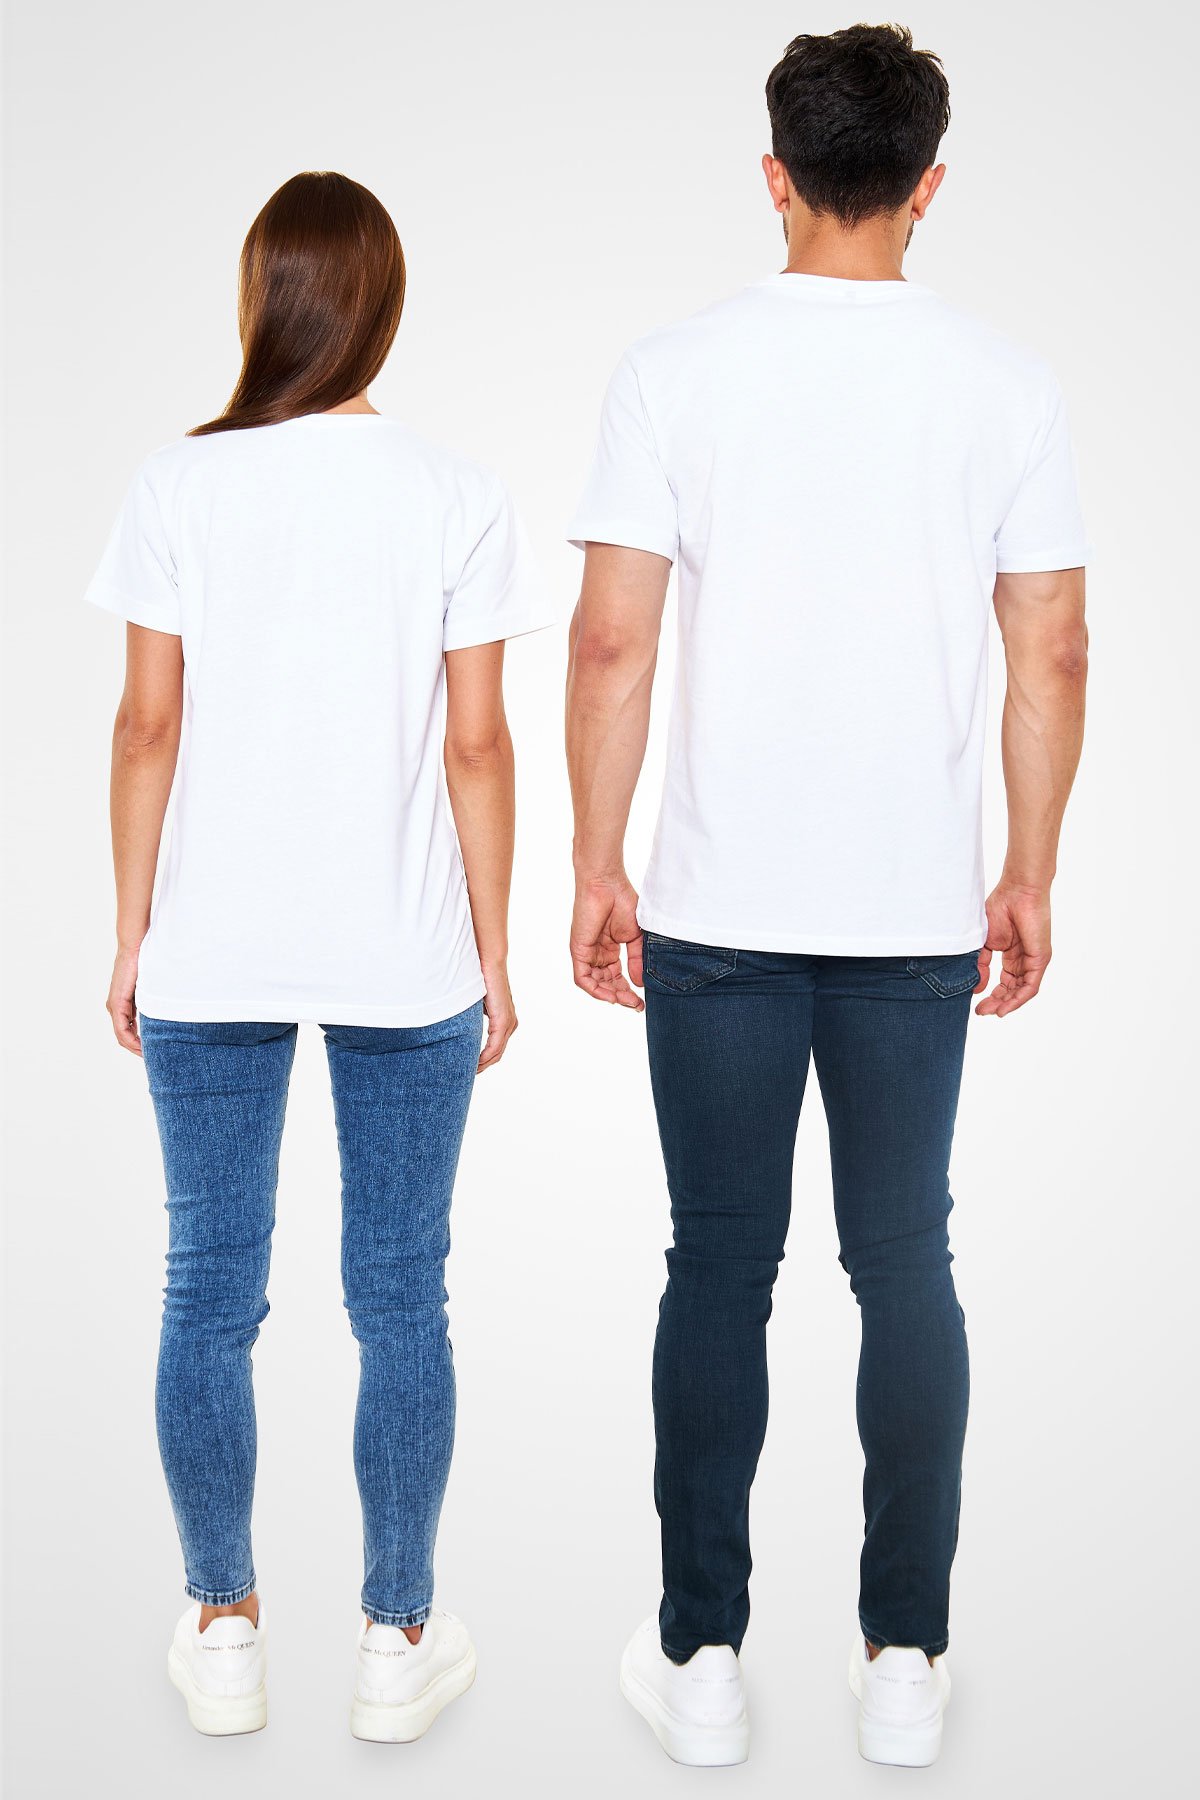 Isaac Newton Yazılı Portre Baskılı Unisex Beyaz T-Shirt